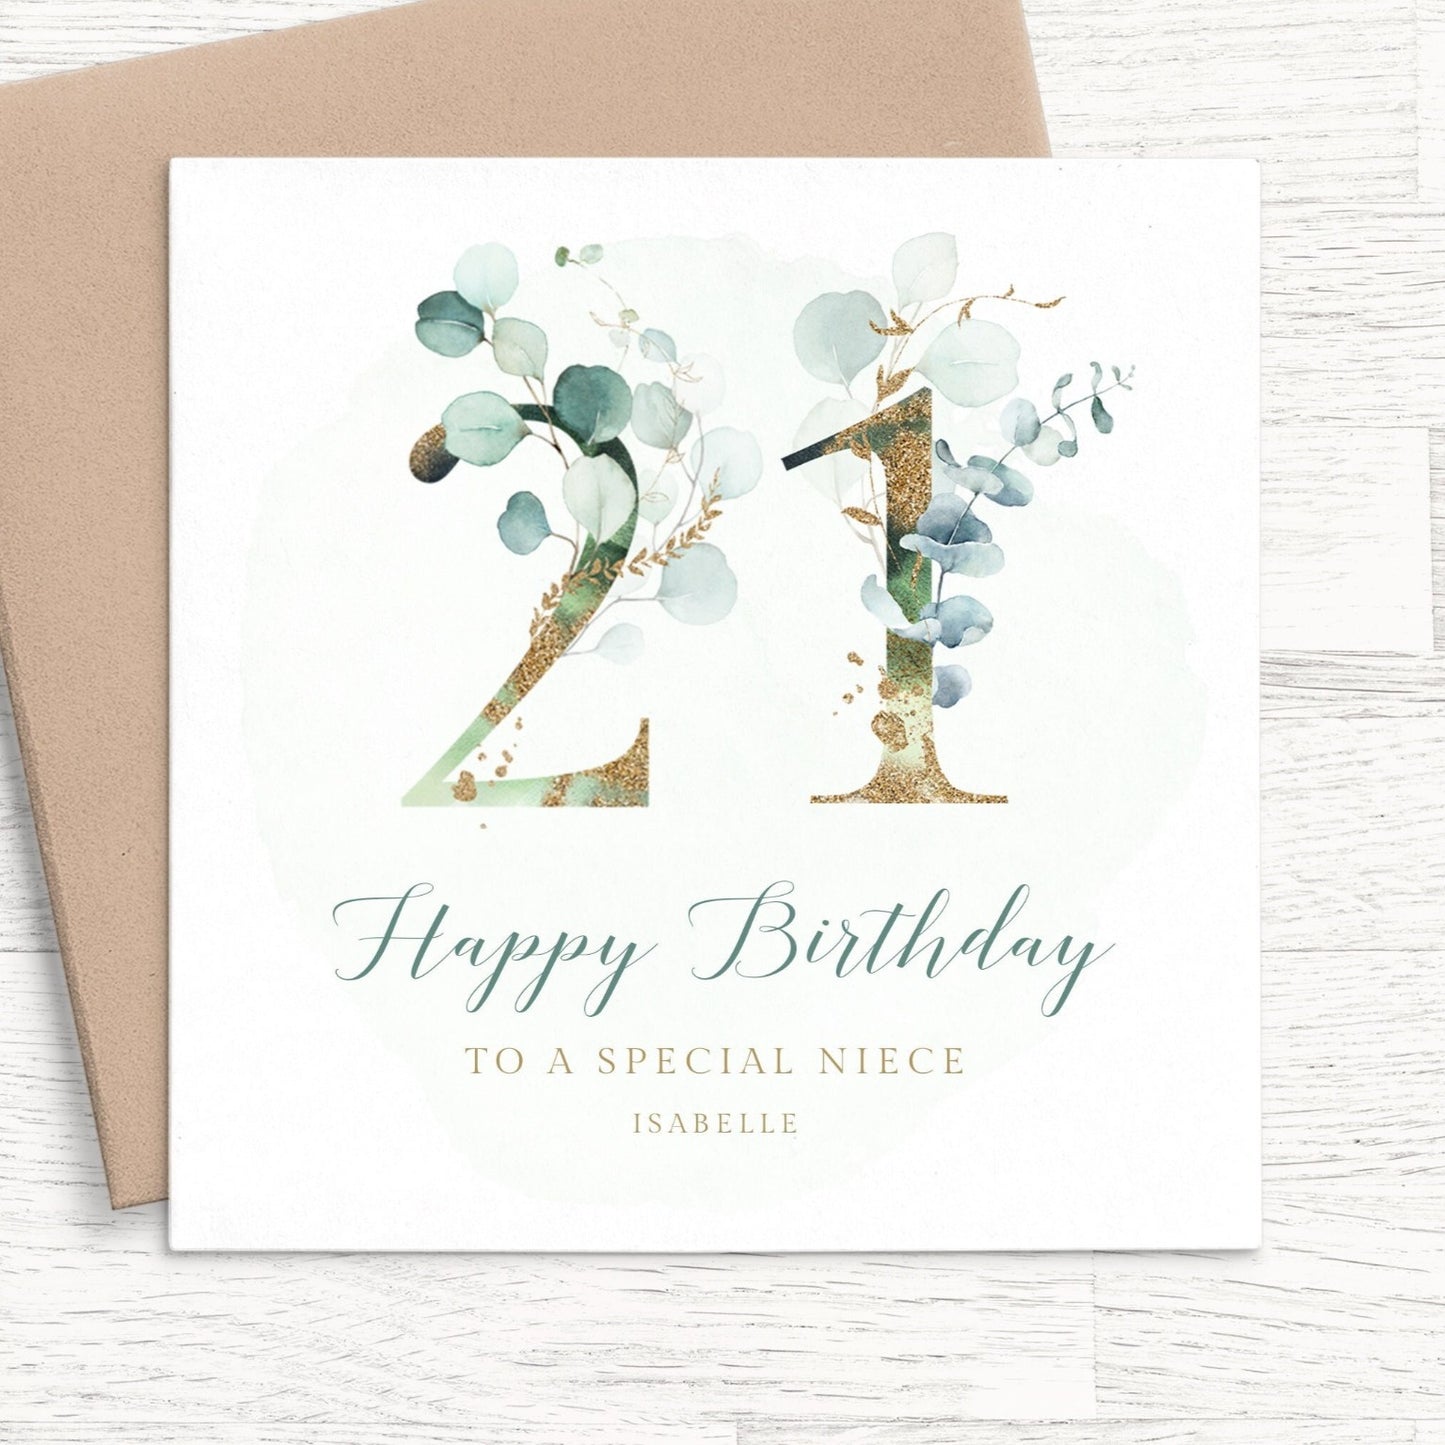 niece eucalyptus 21st birthday card personalised smooth matte white cardstock kraft brown envelope